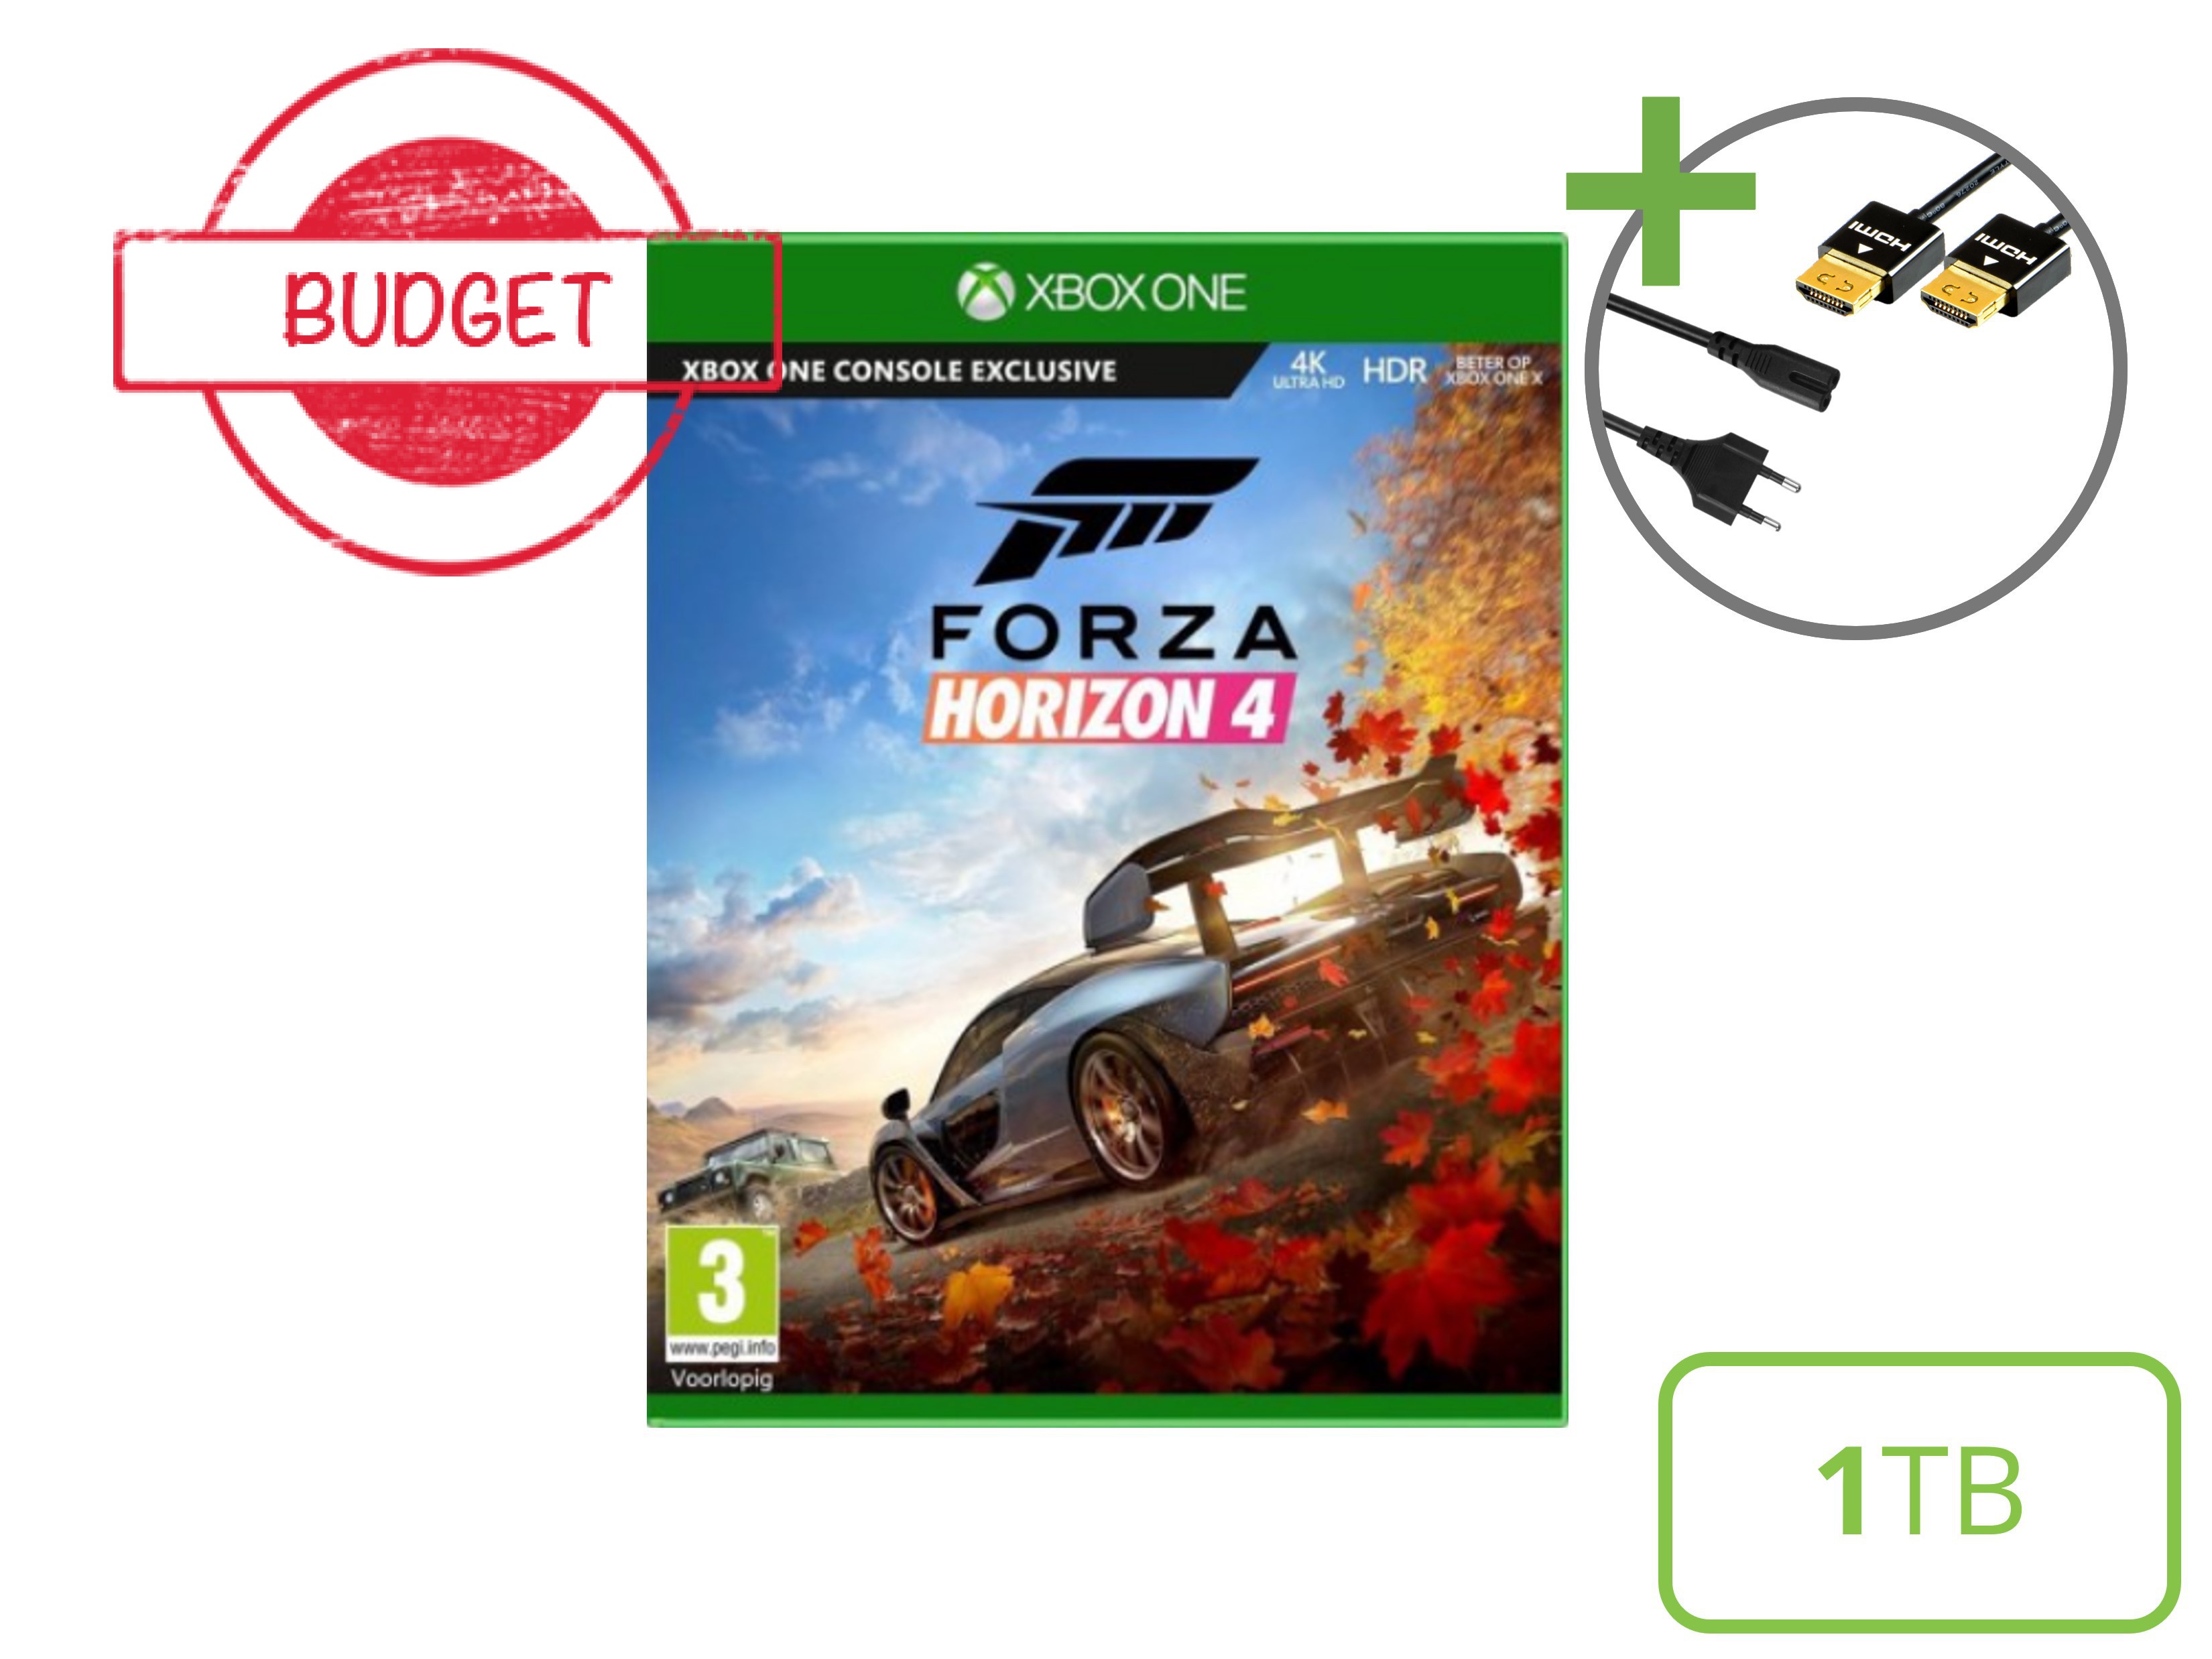 Microsoft Xbox One S Starter Pack - 1TB Forza Horizon 4  Edition - Budget - Xbox One Hardware - 4